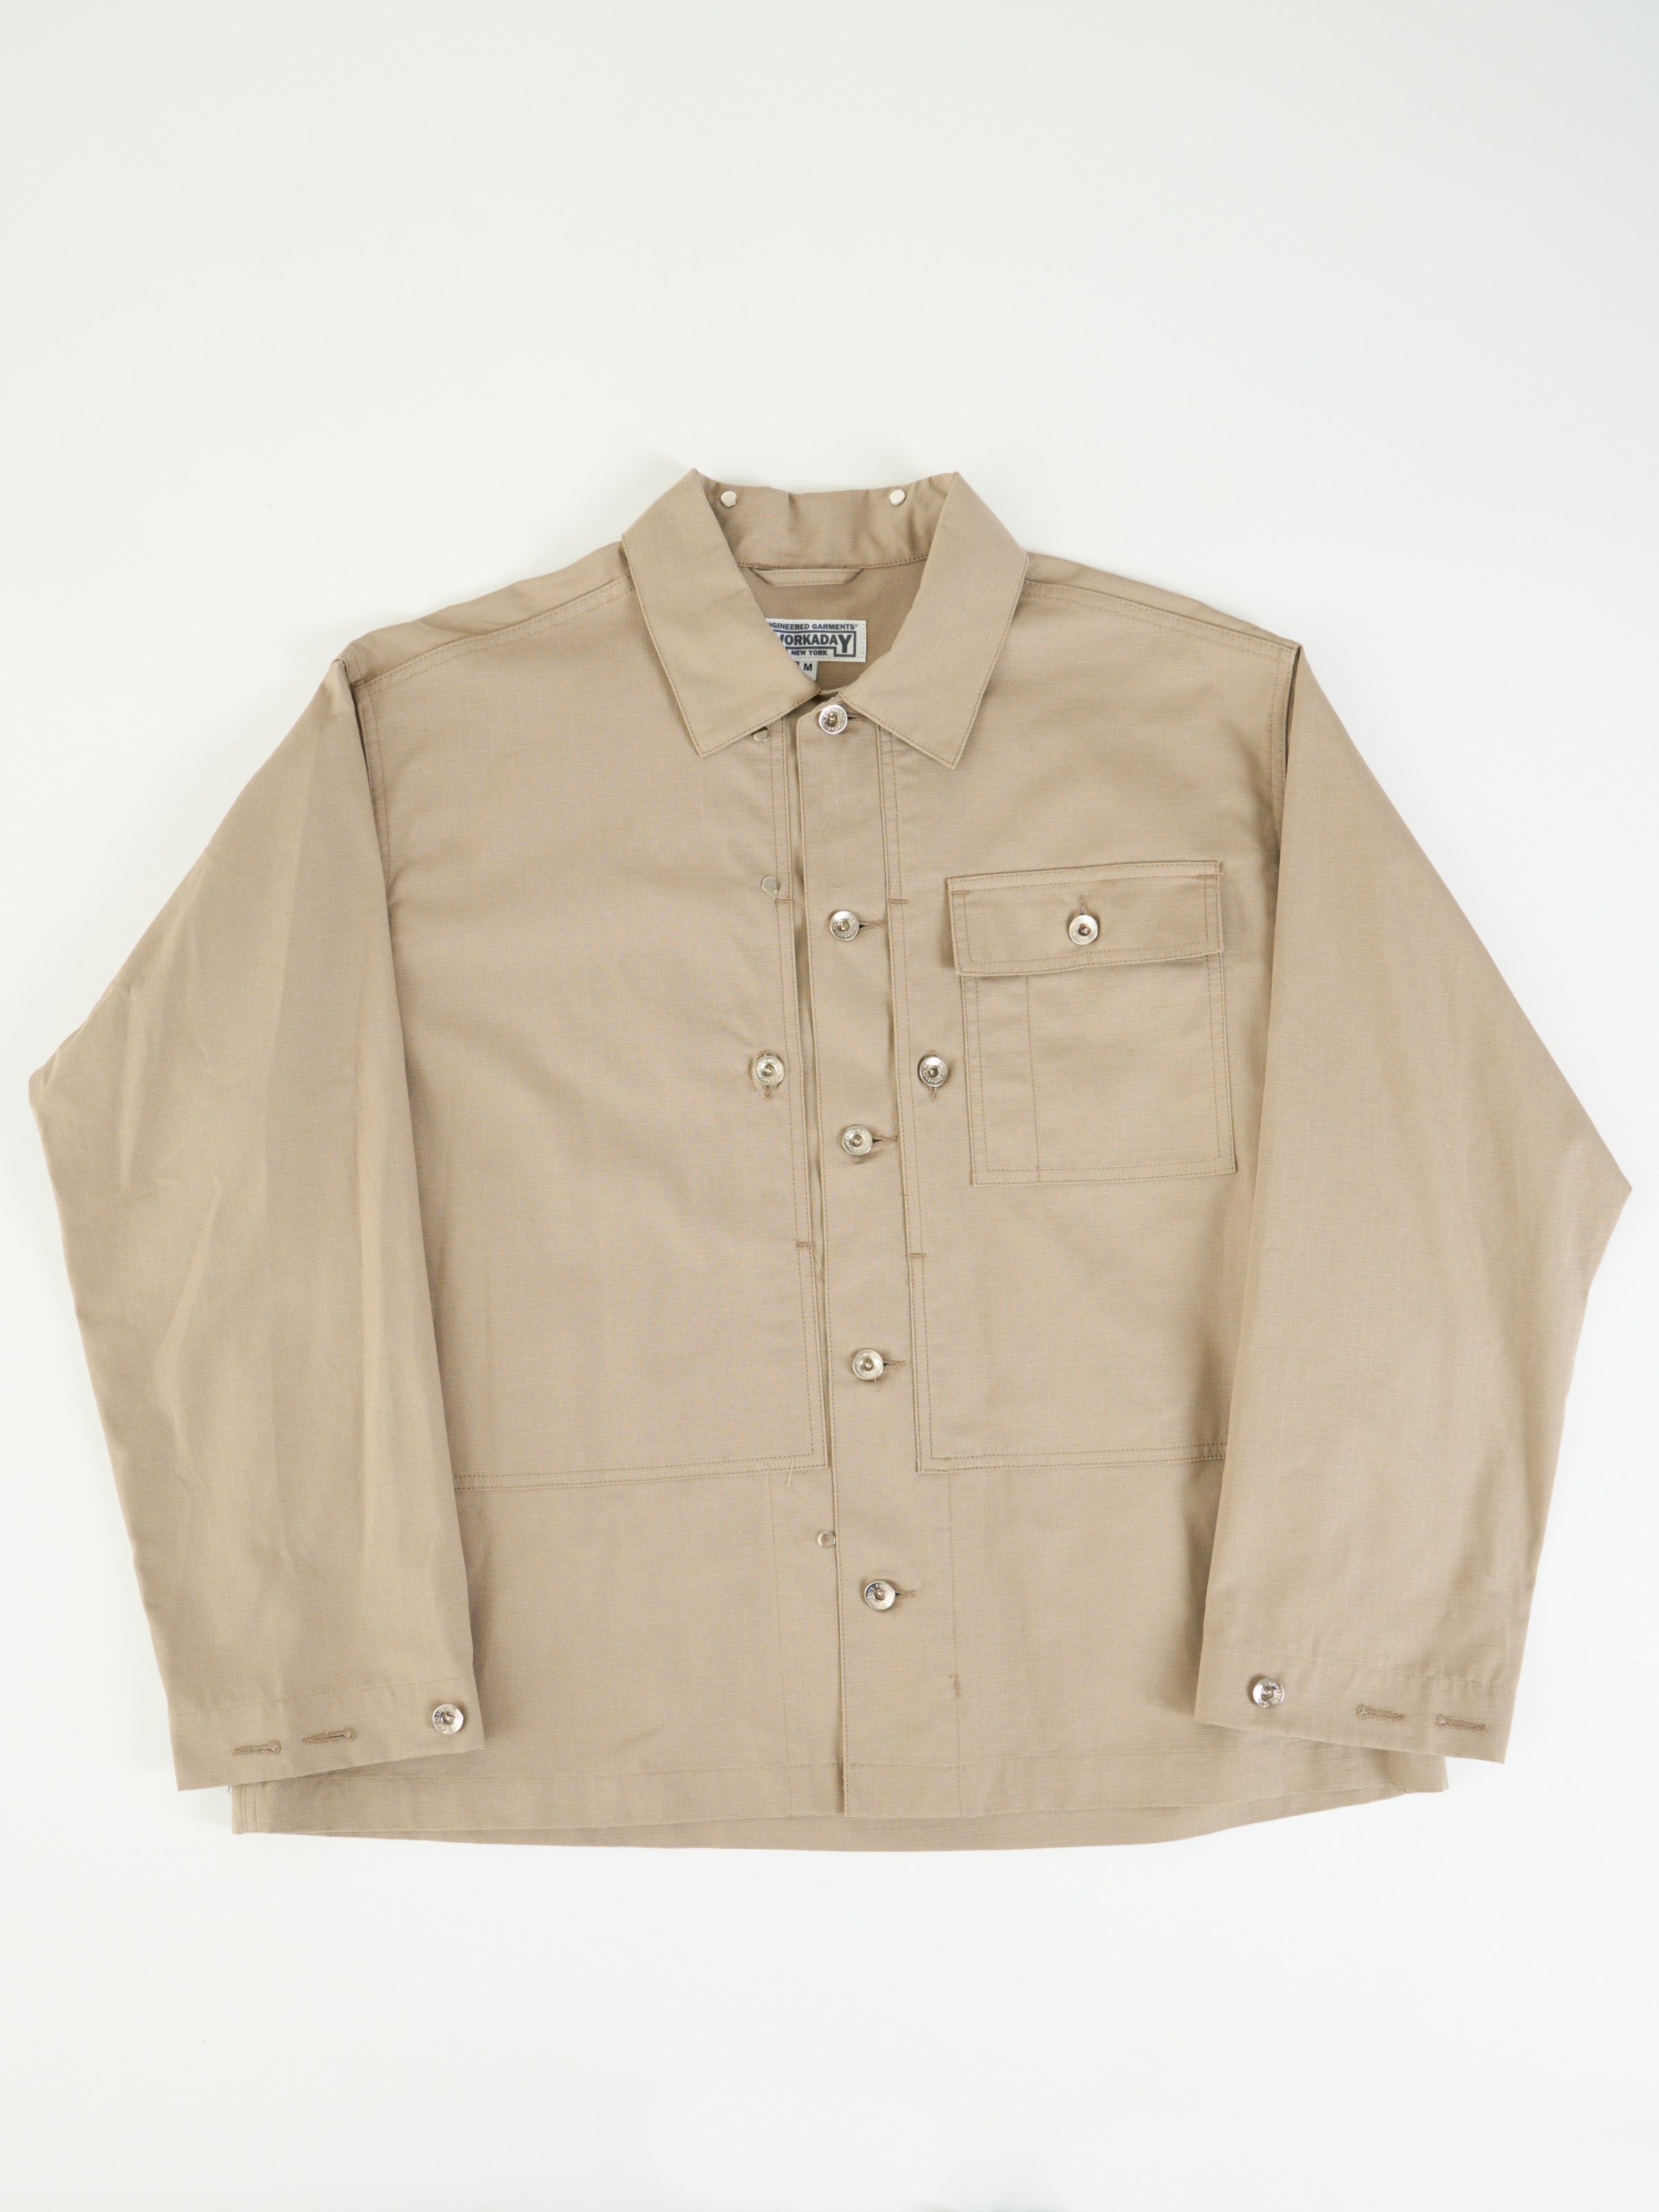 P44 Jacket - Khaki Cotton Ripstop